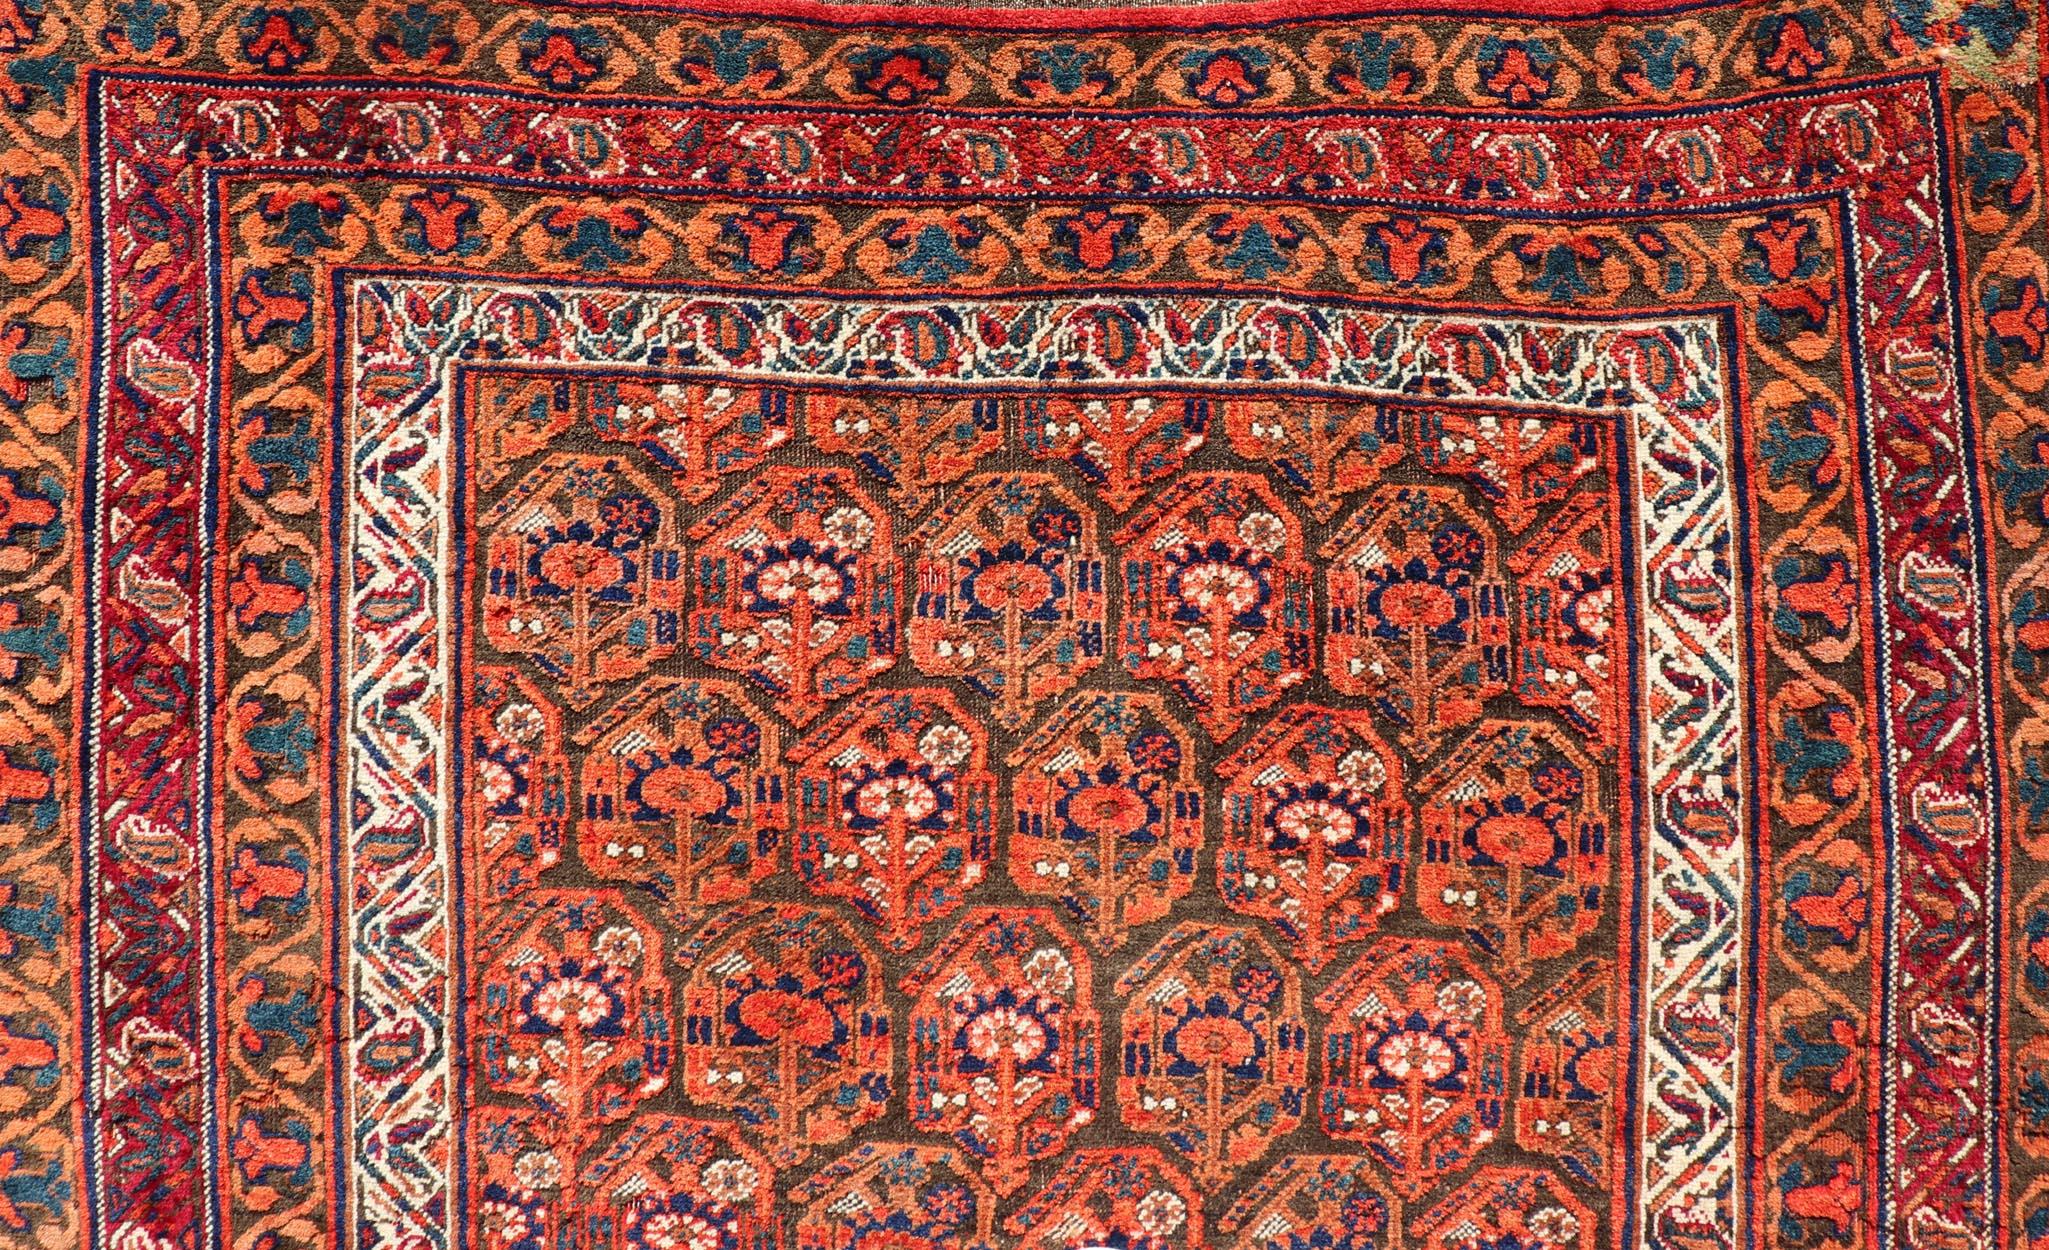  Fine Persian Antique Afshar Rug in Orange and Copper Background & Multi Colors In Good Condition For Sale In Atlanta, GA